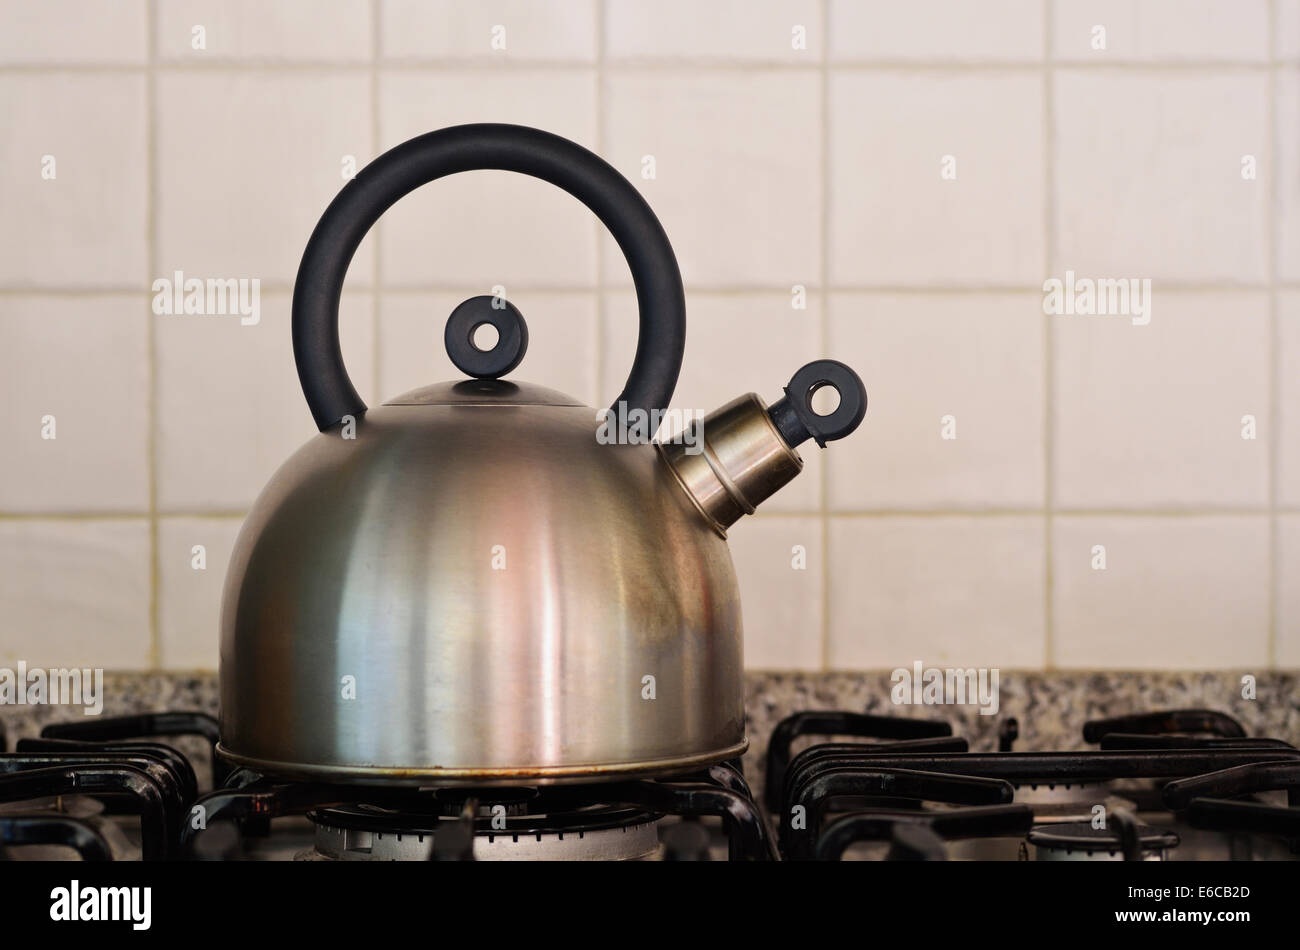 https://c8.alamy.com/comp/E6CB2D/kettle-teapot-on-gas-stove-burner-on-the-kitchen-cooker-hob-E6CB2D.jpg